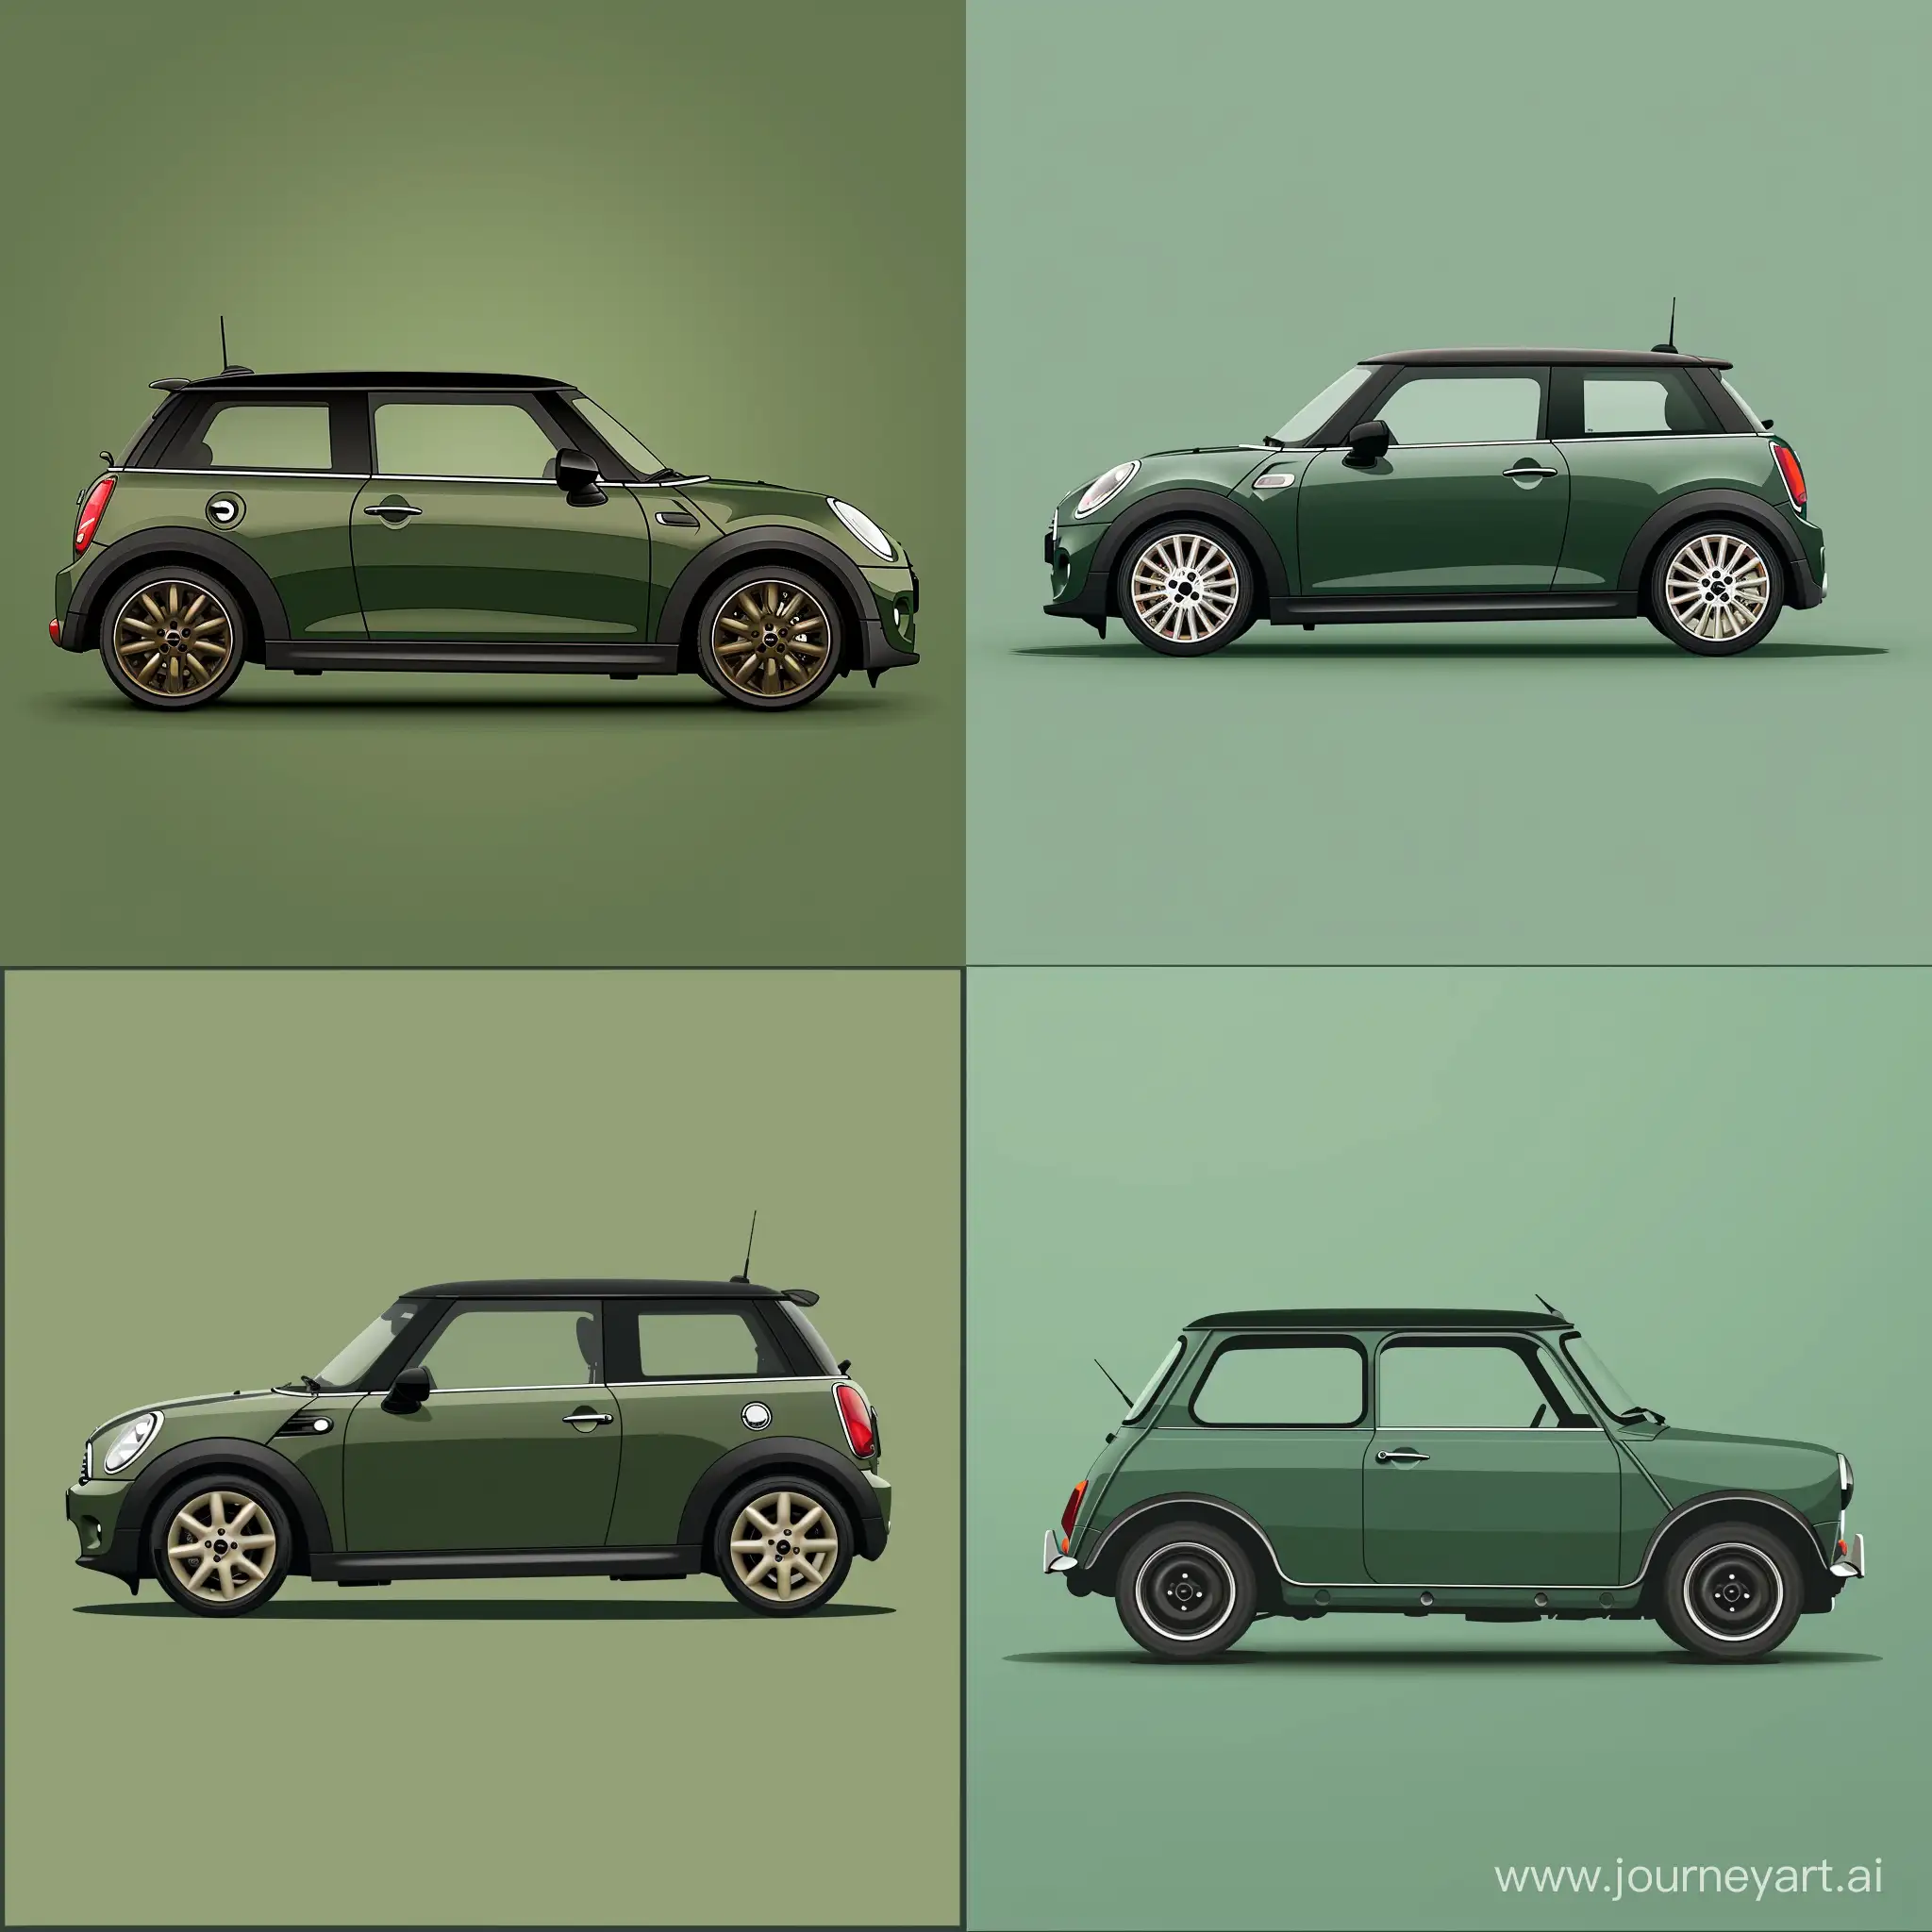 Minimalist-2D-Illustration-Hunter-Green-Mini-Cooper-Car-on-Simple-Background